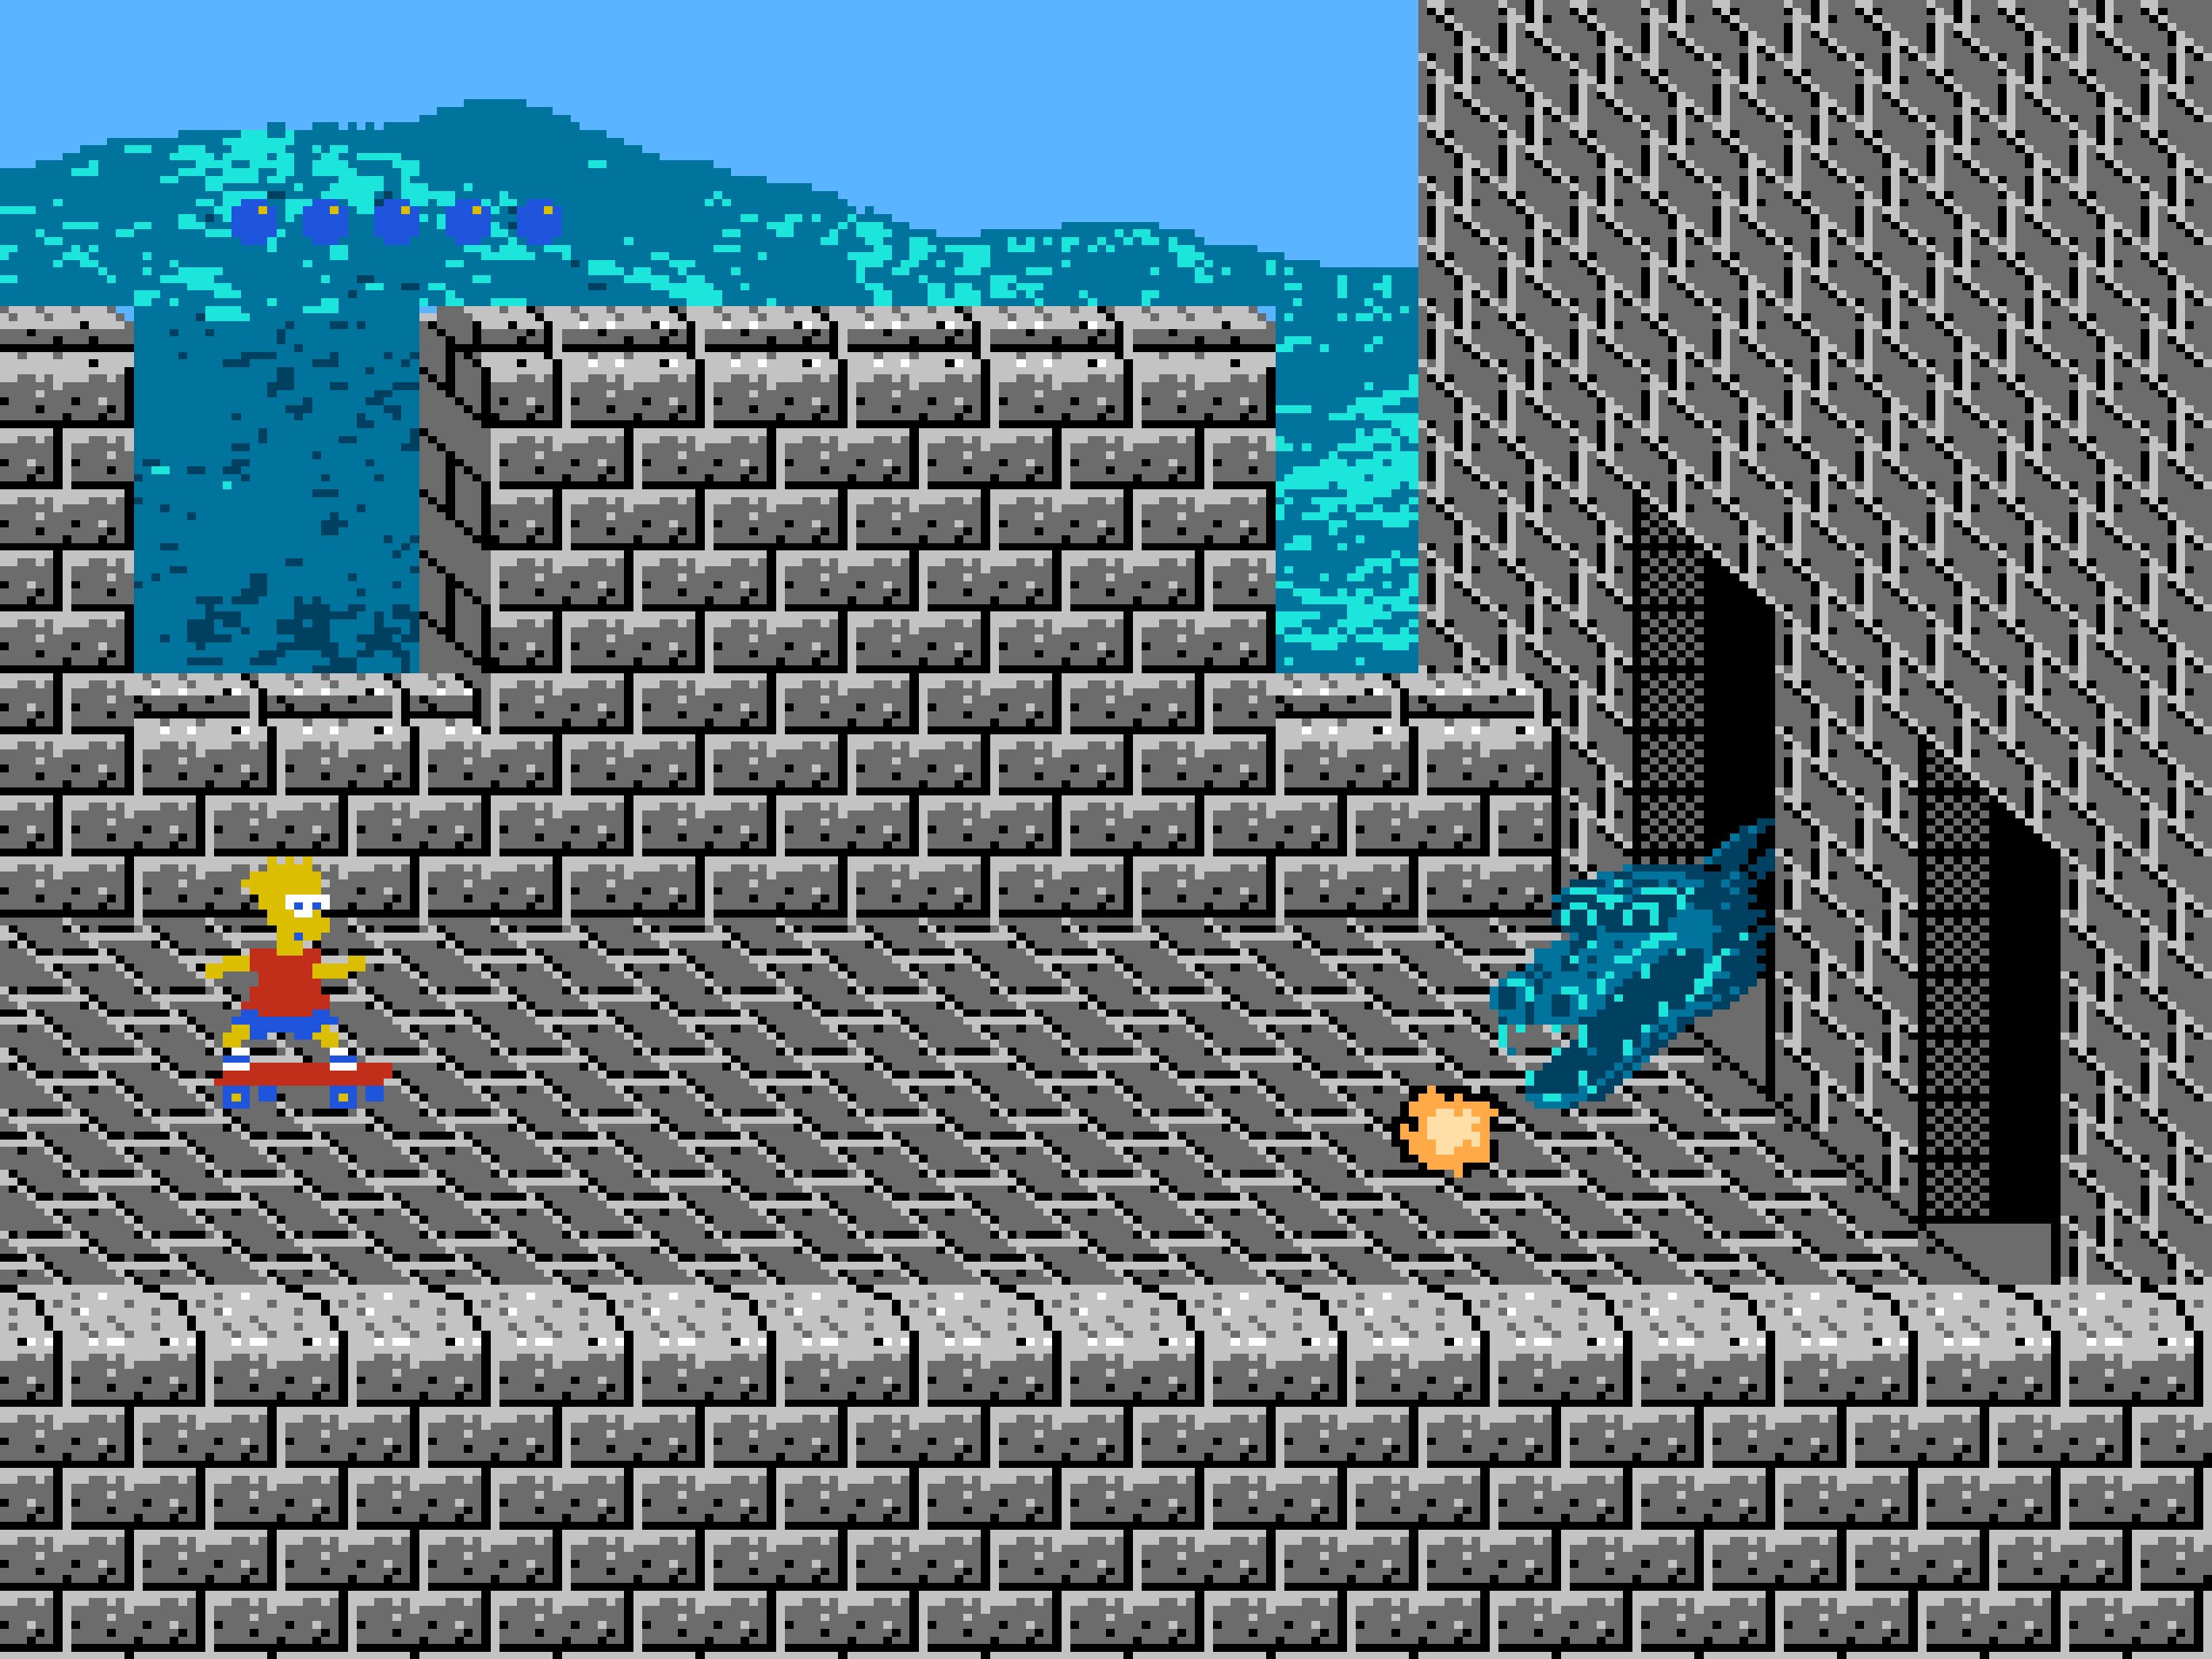 sig selv præst evne Mathieu Pronovost on Twitter: "[NES] The Simpsons: Bart vs. the World  (1991) #thesimpsons #simpsons #bartvstheworld #bart #bartsimpson #skate  #skateboard #dragon #castle #nes #nintendo #games https://t.co/xbzS6qbXdP"  / Twitter